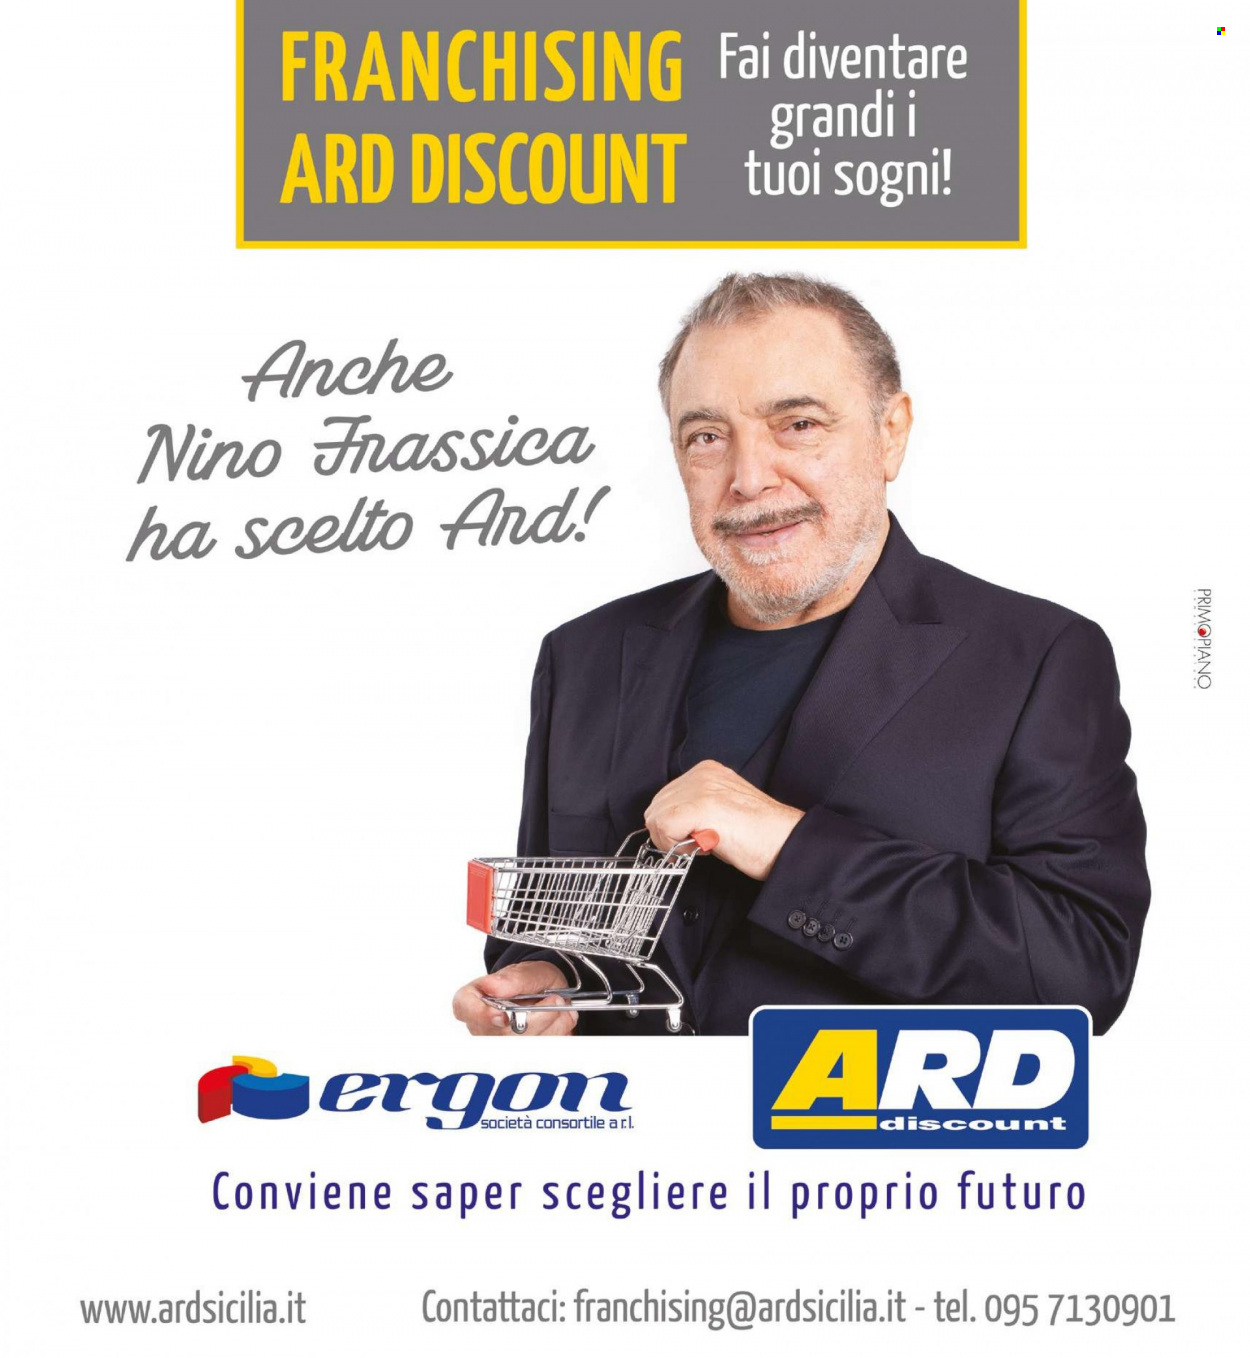 Volantino ARD Discount - 19.9.2022 - 28.9.2022.